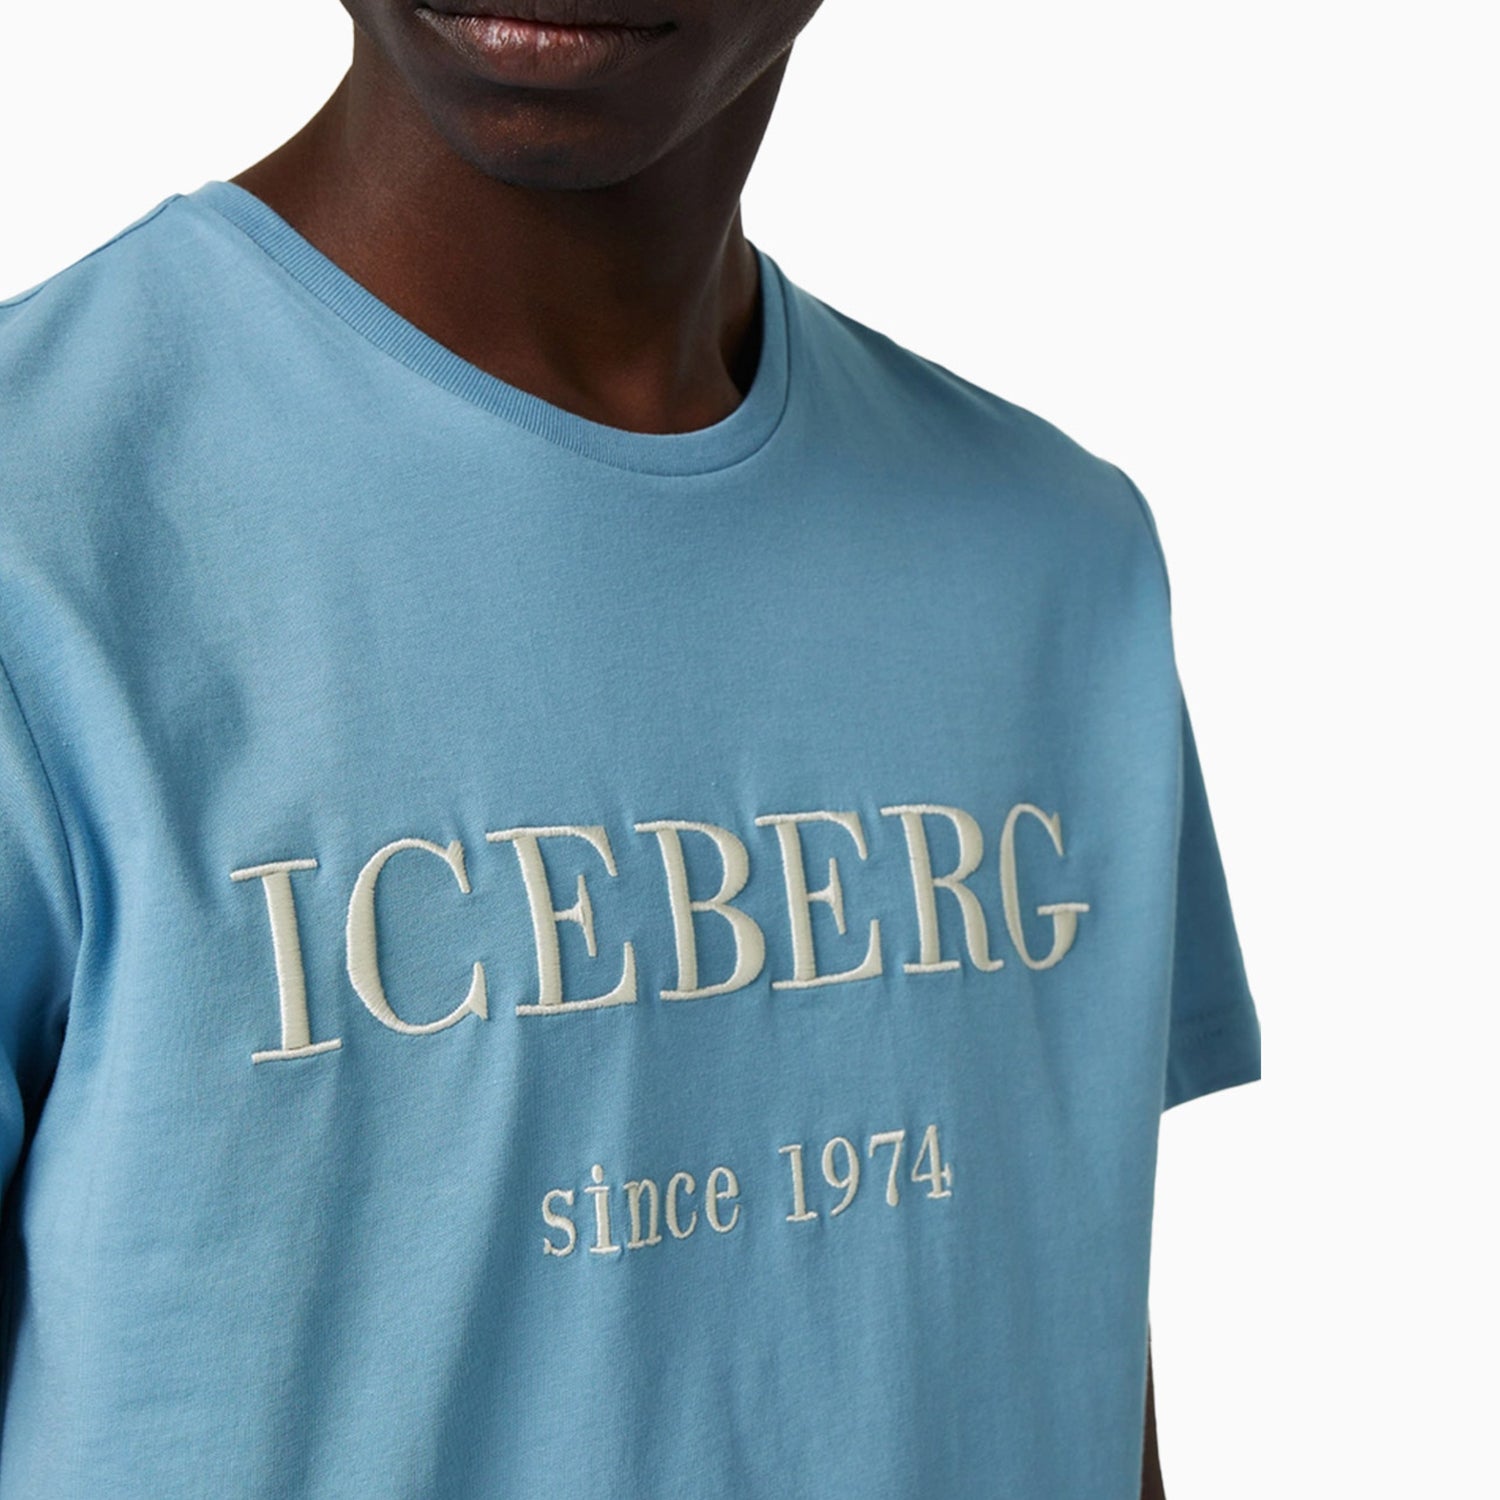 iceberg-mens-embroidered-heritage-logo-t-shirt-in-celestial-blue-f014-6301-6373